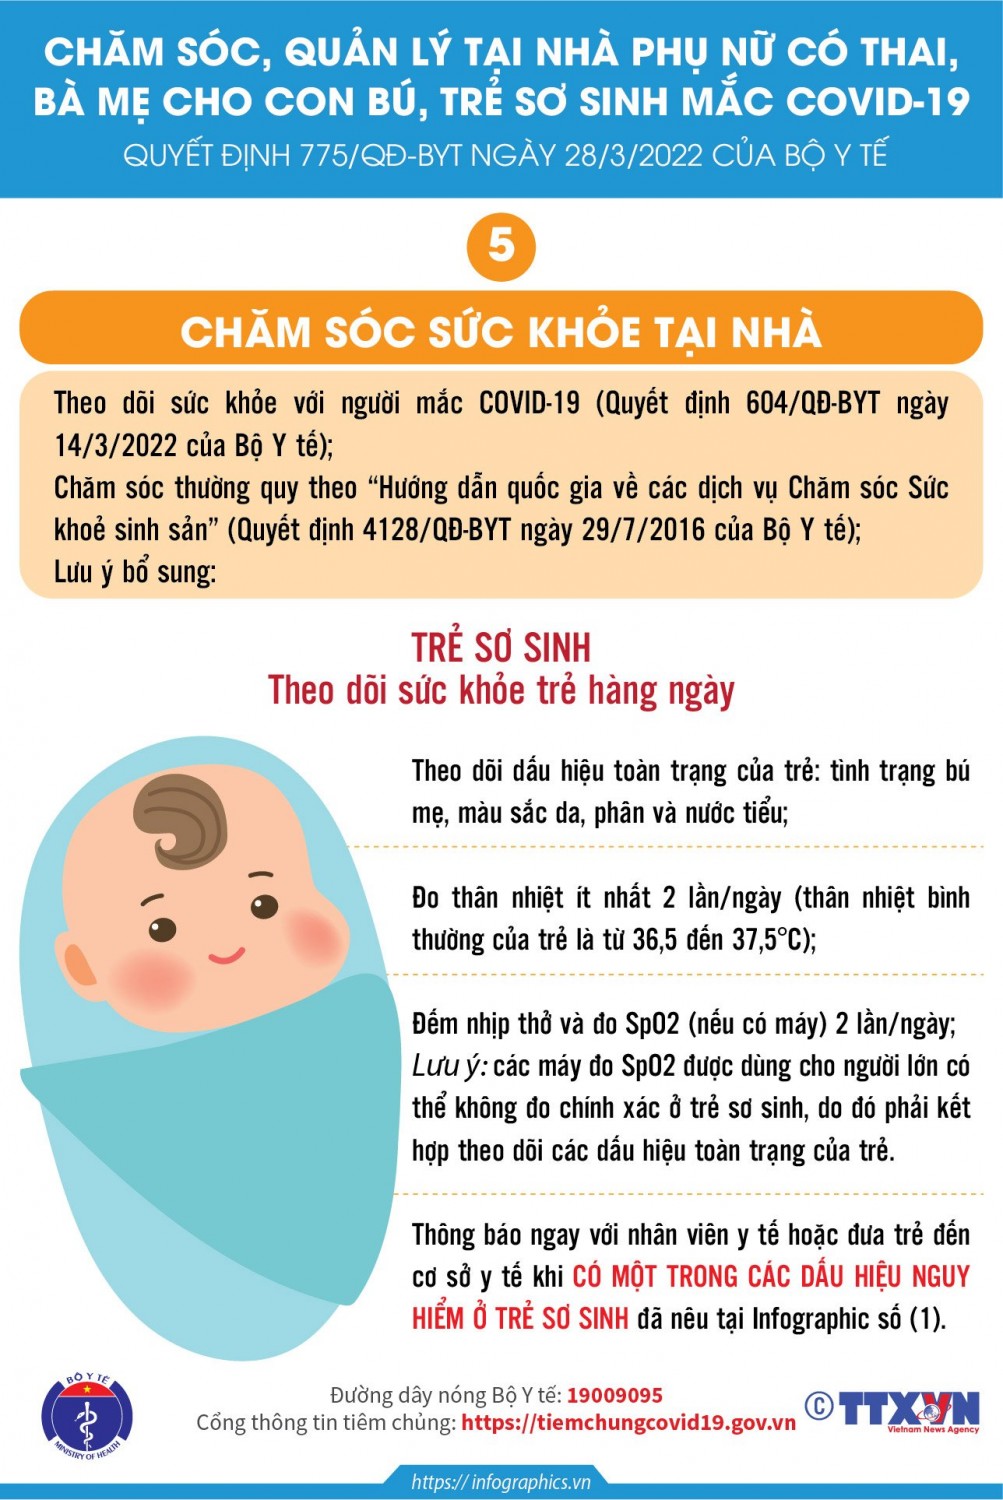 cham soc, phu nu co thai mac covid (5)